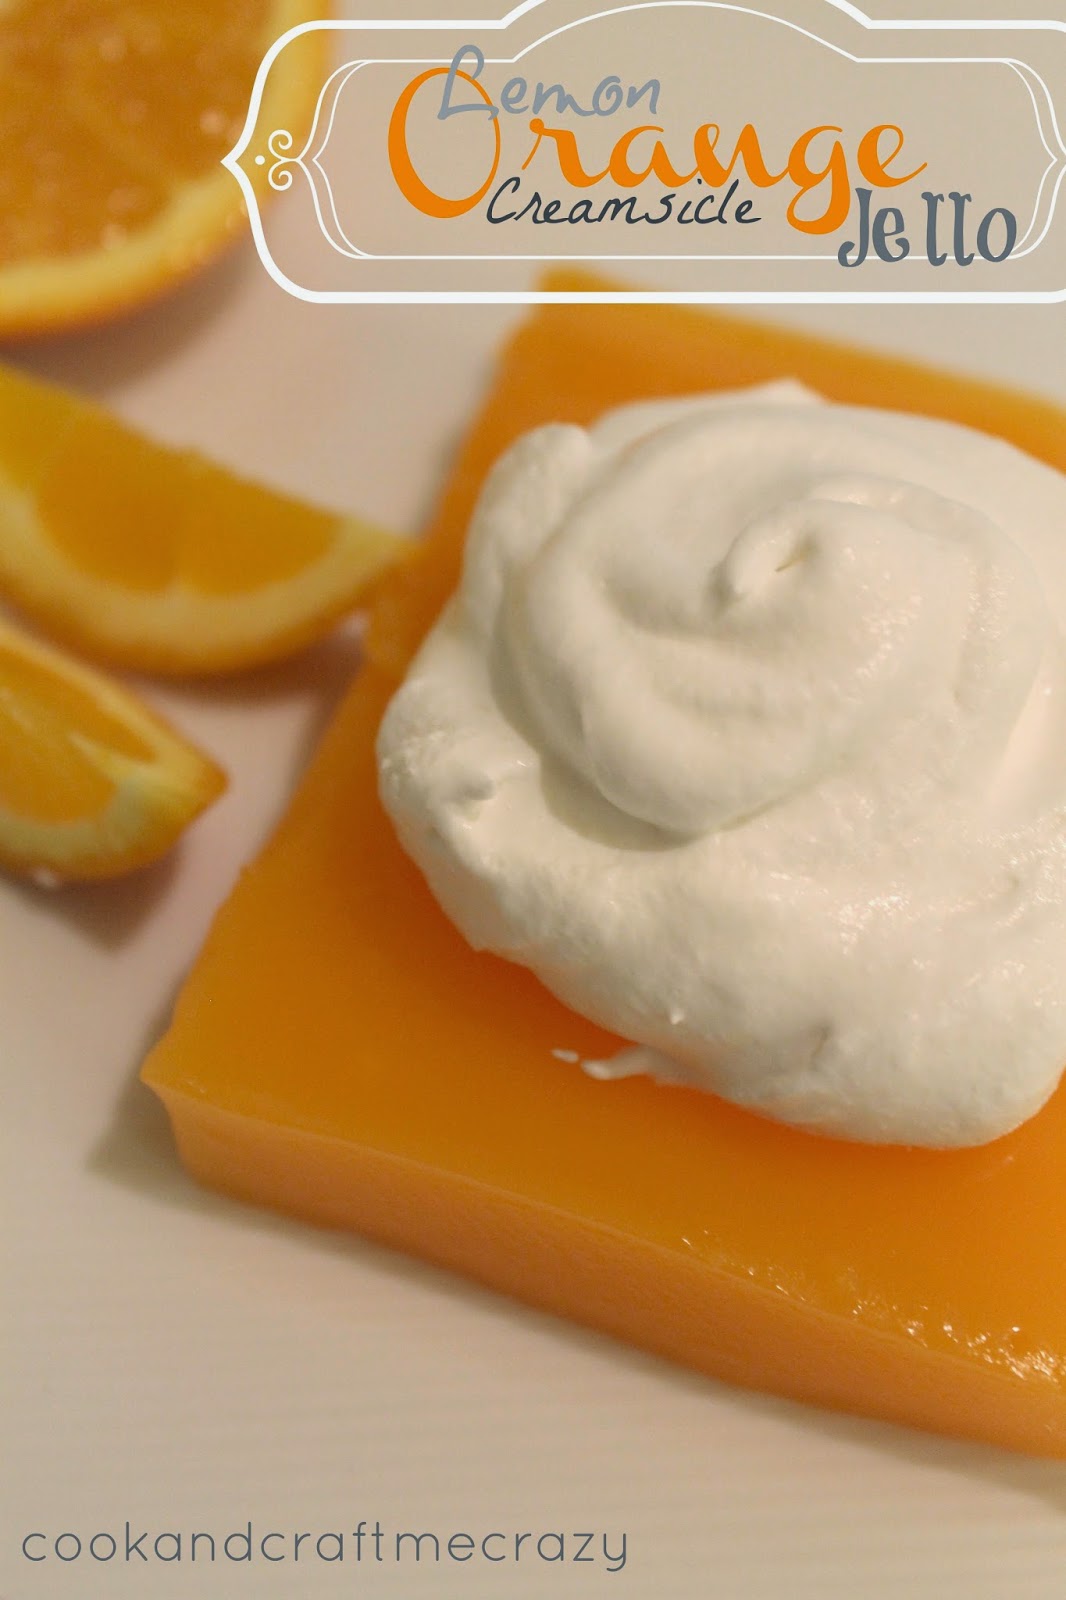 http://cookandcraftmecrazy.blogspot.com/2013/03/lemon-orange-creamsicle-jello.html